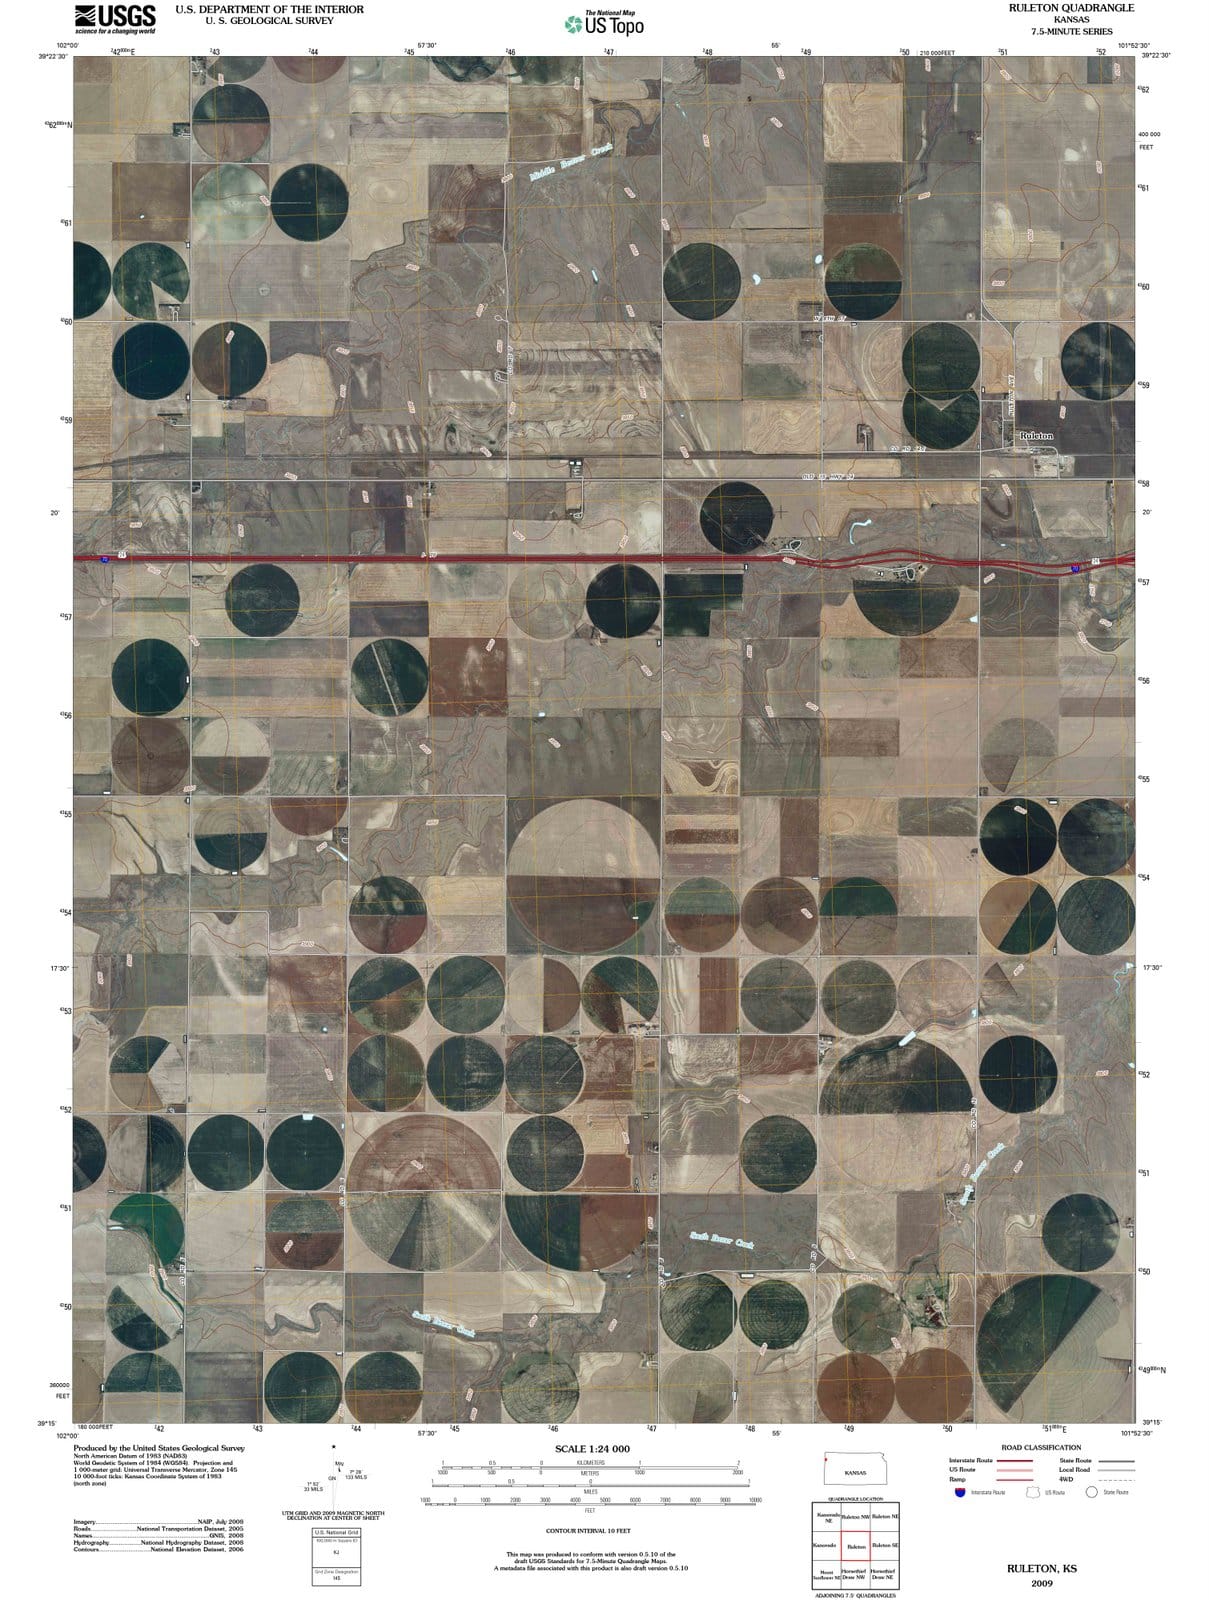 2009 Ruleton, KS - Kansas - USGS Topographic Map